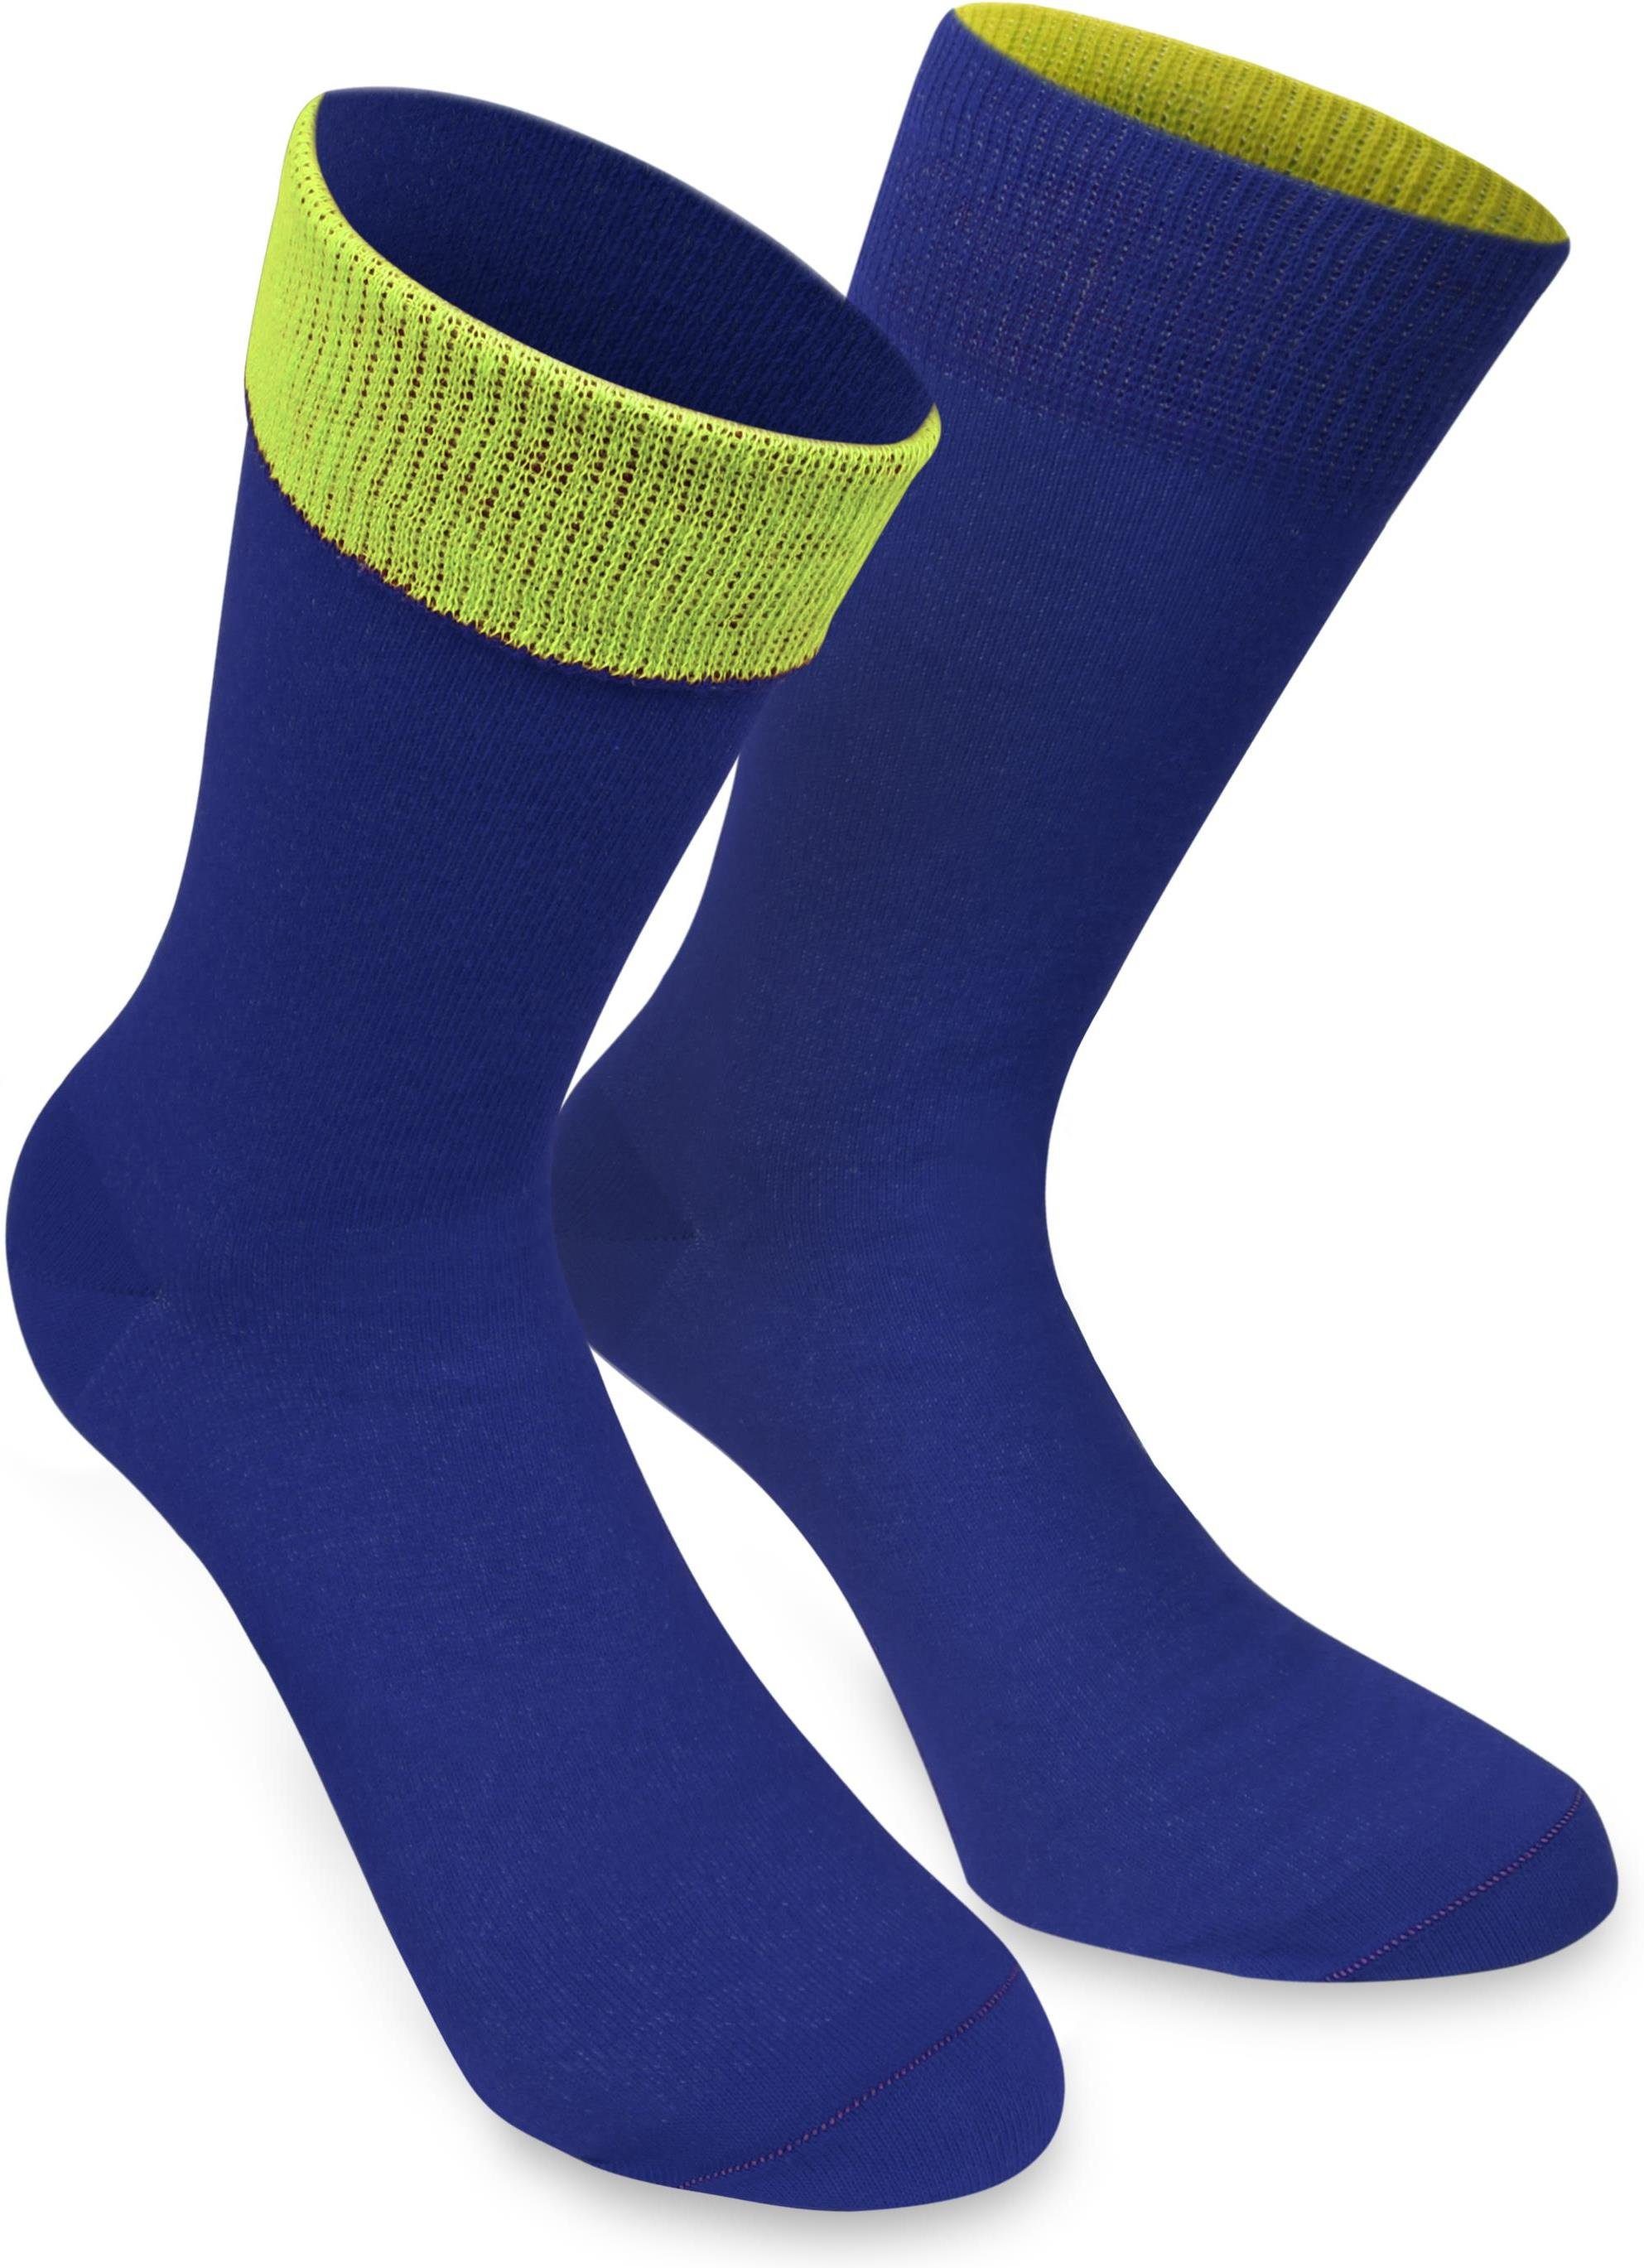 Wäsche/Bademode Socken normani Basicsocken 1 Paar Socken Bi-Color (1 Paar) farbig abgesetzter Bund